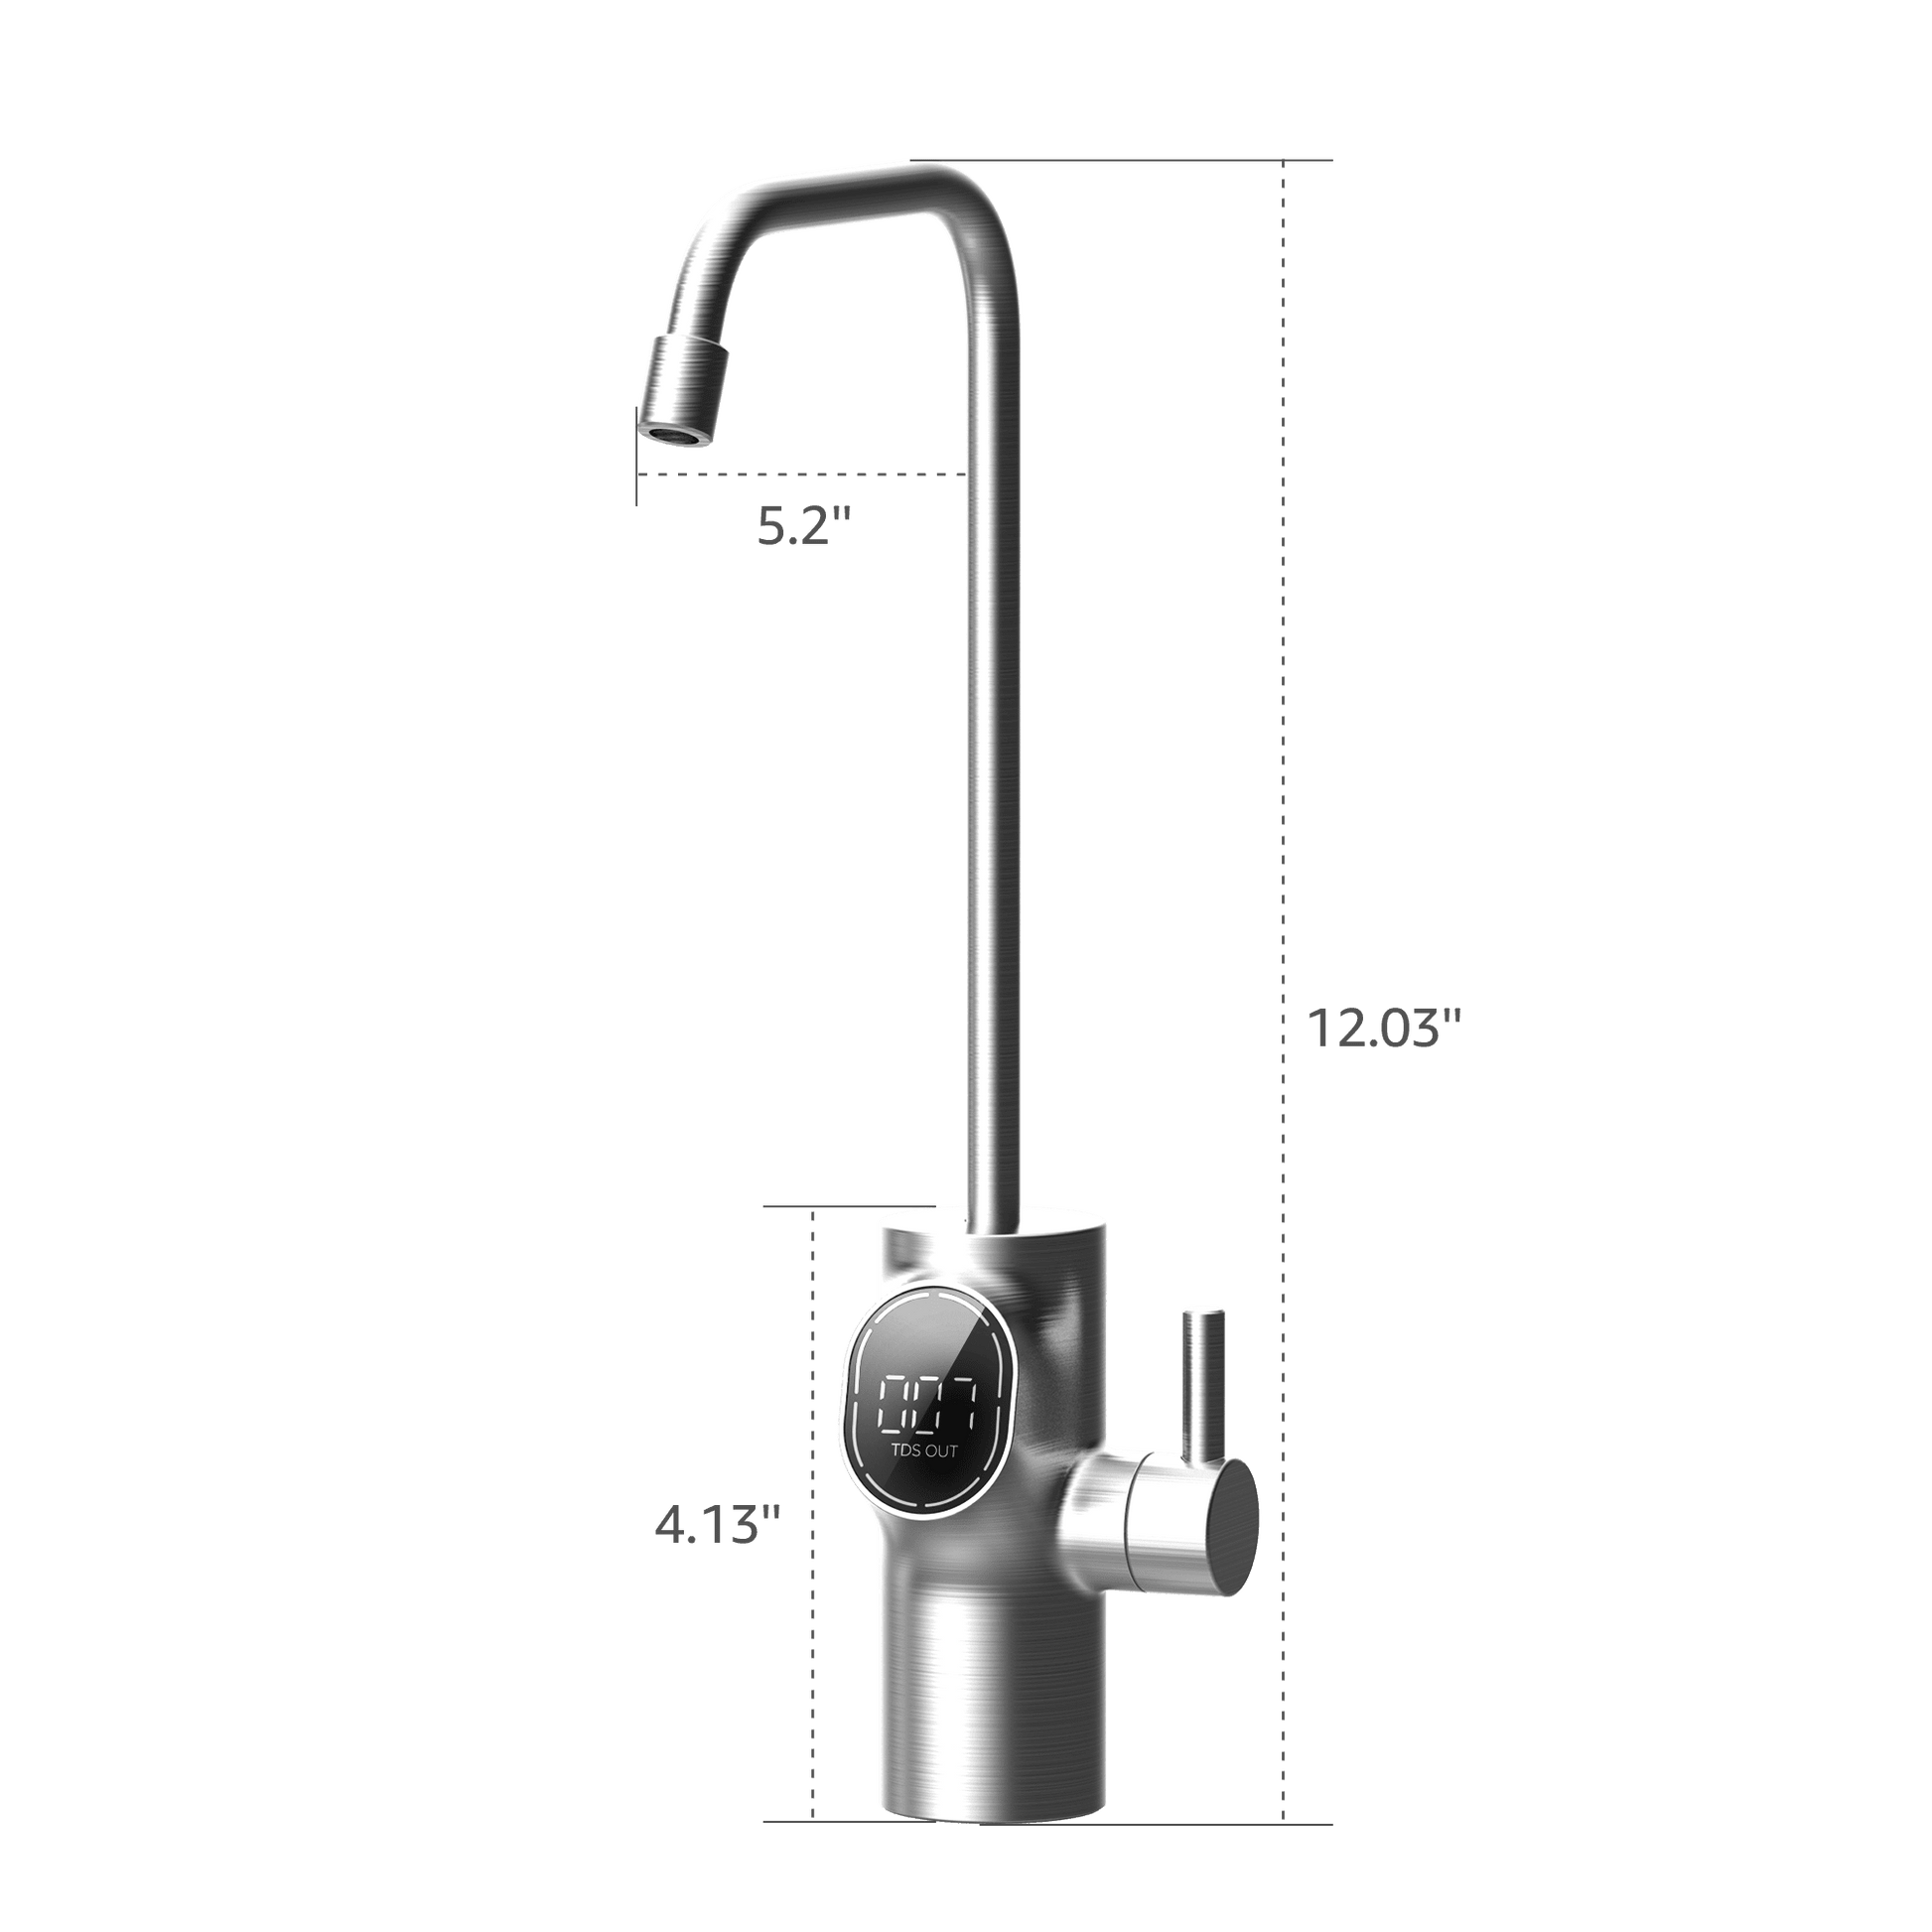 Waterdrop D6 600GPD Under Sink Reverse Osmosis System